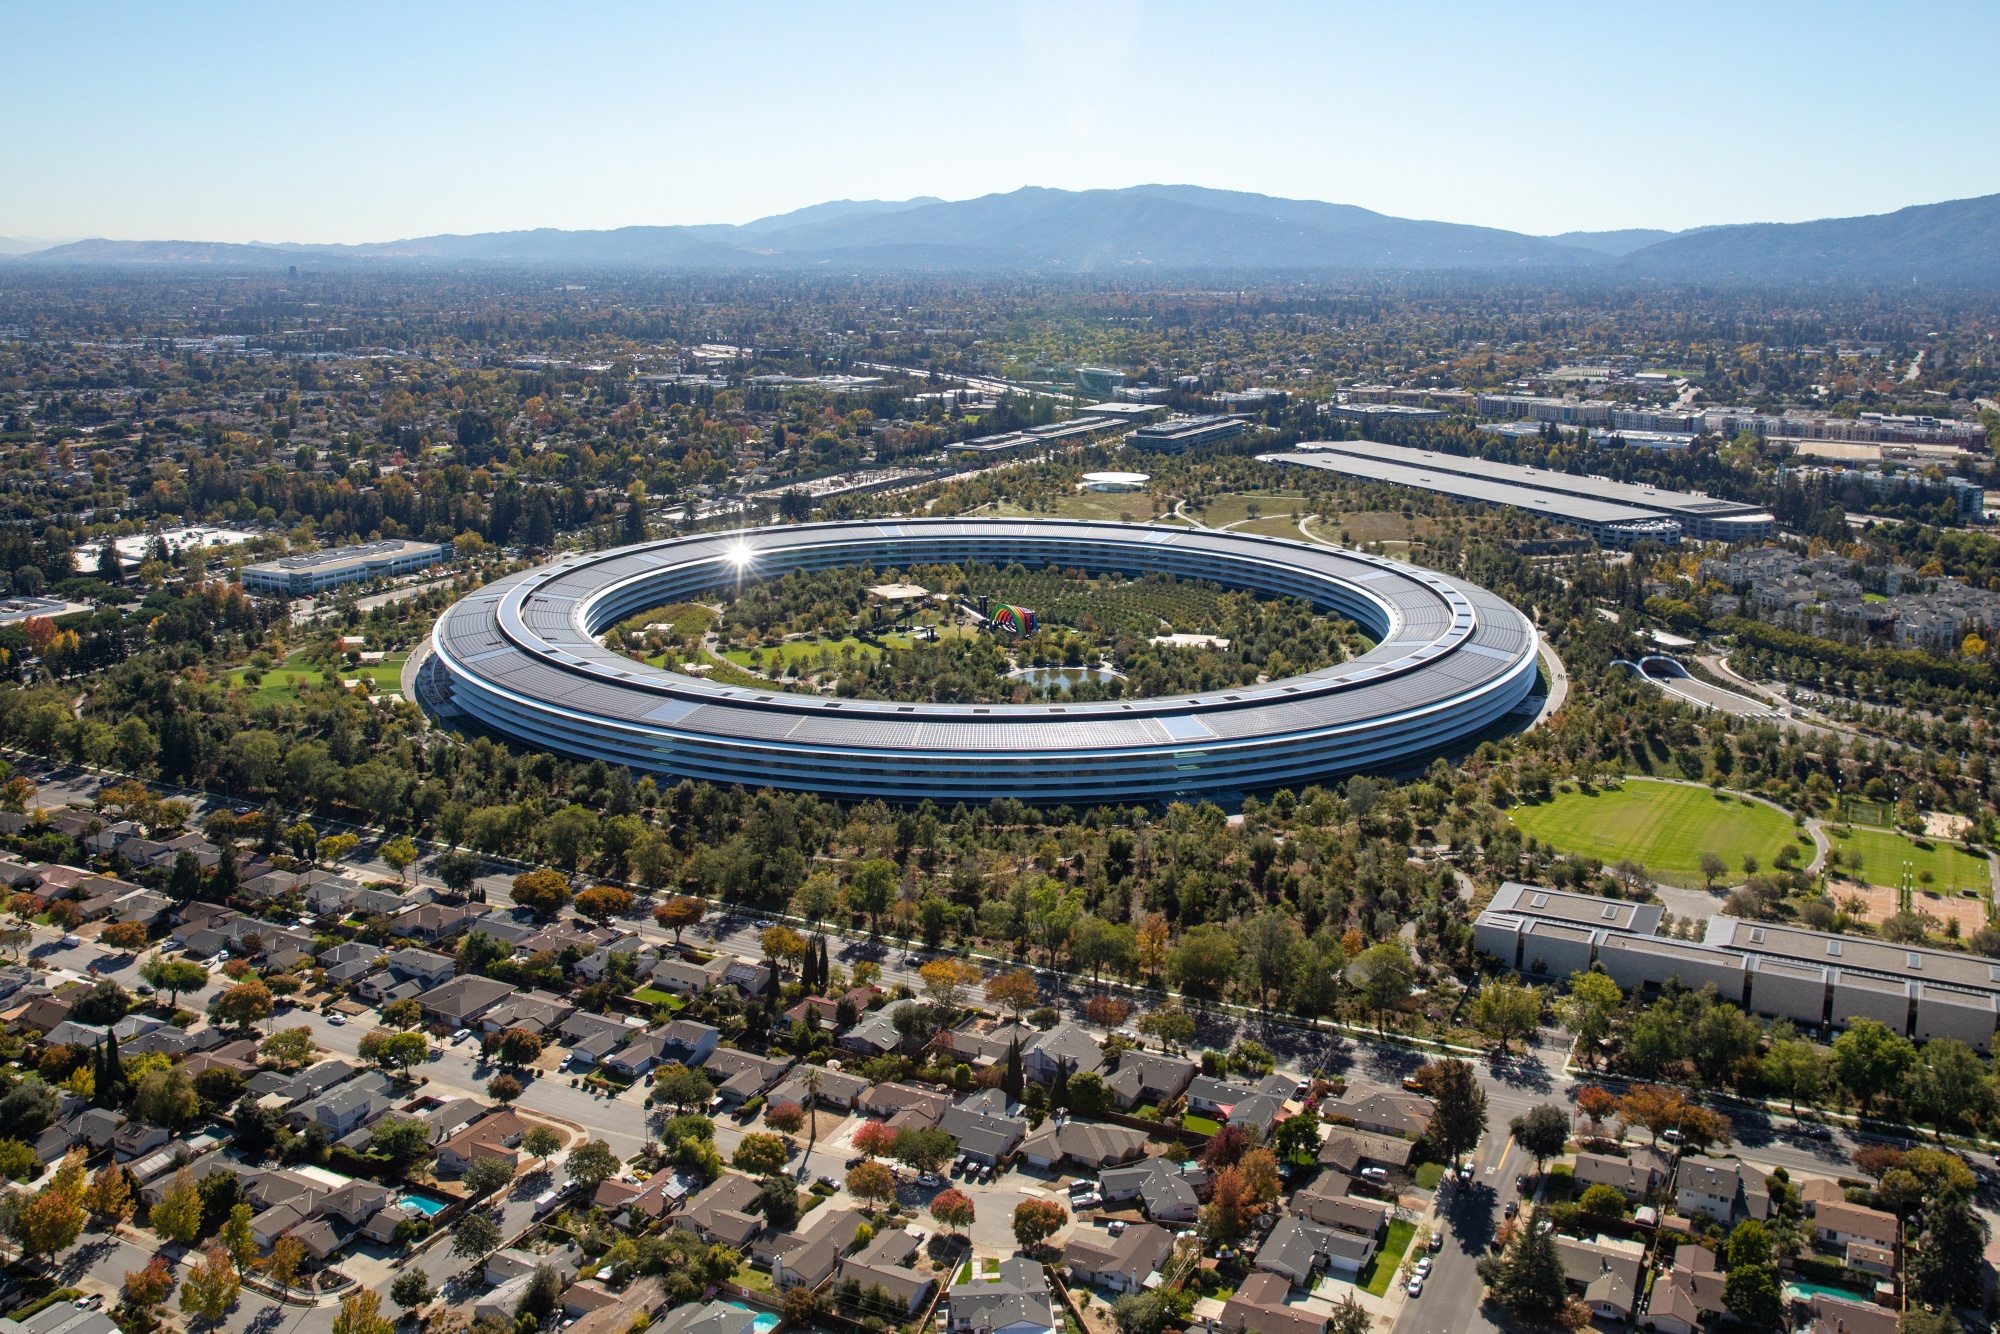 Apple Park Headquarters in Cupertino, California.